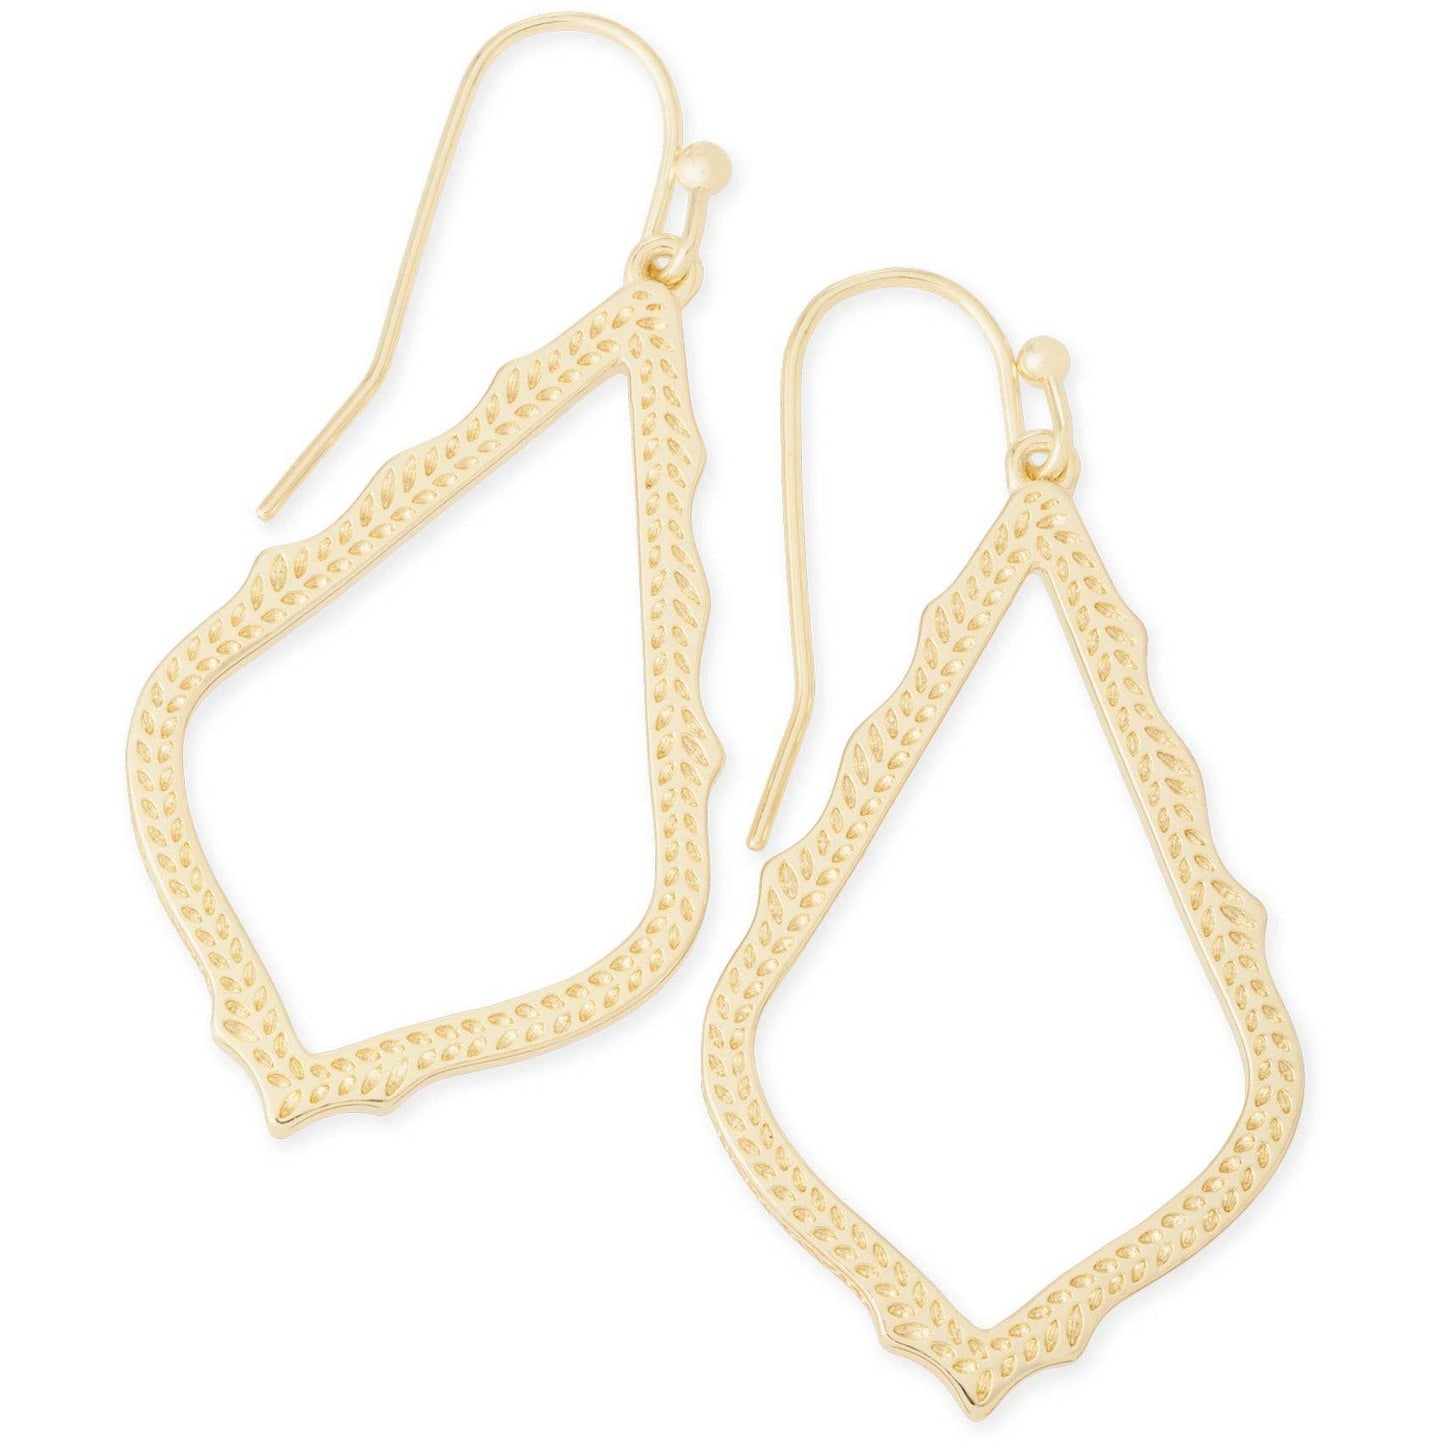 Kendra Scott - Sophia Drop Earrings in Gold - Findlay Rowe Designs